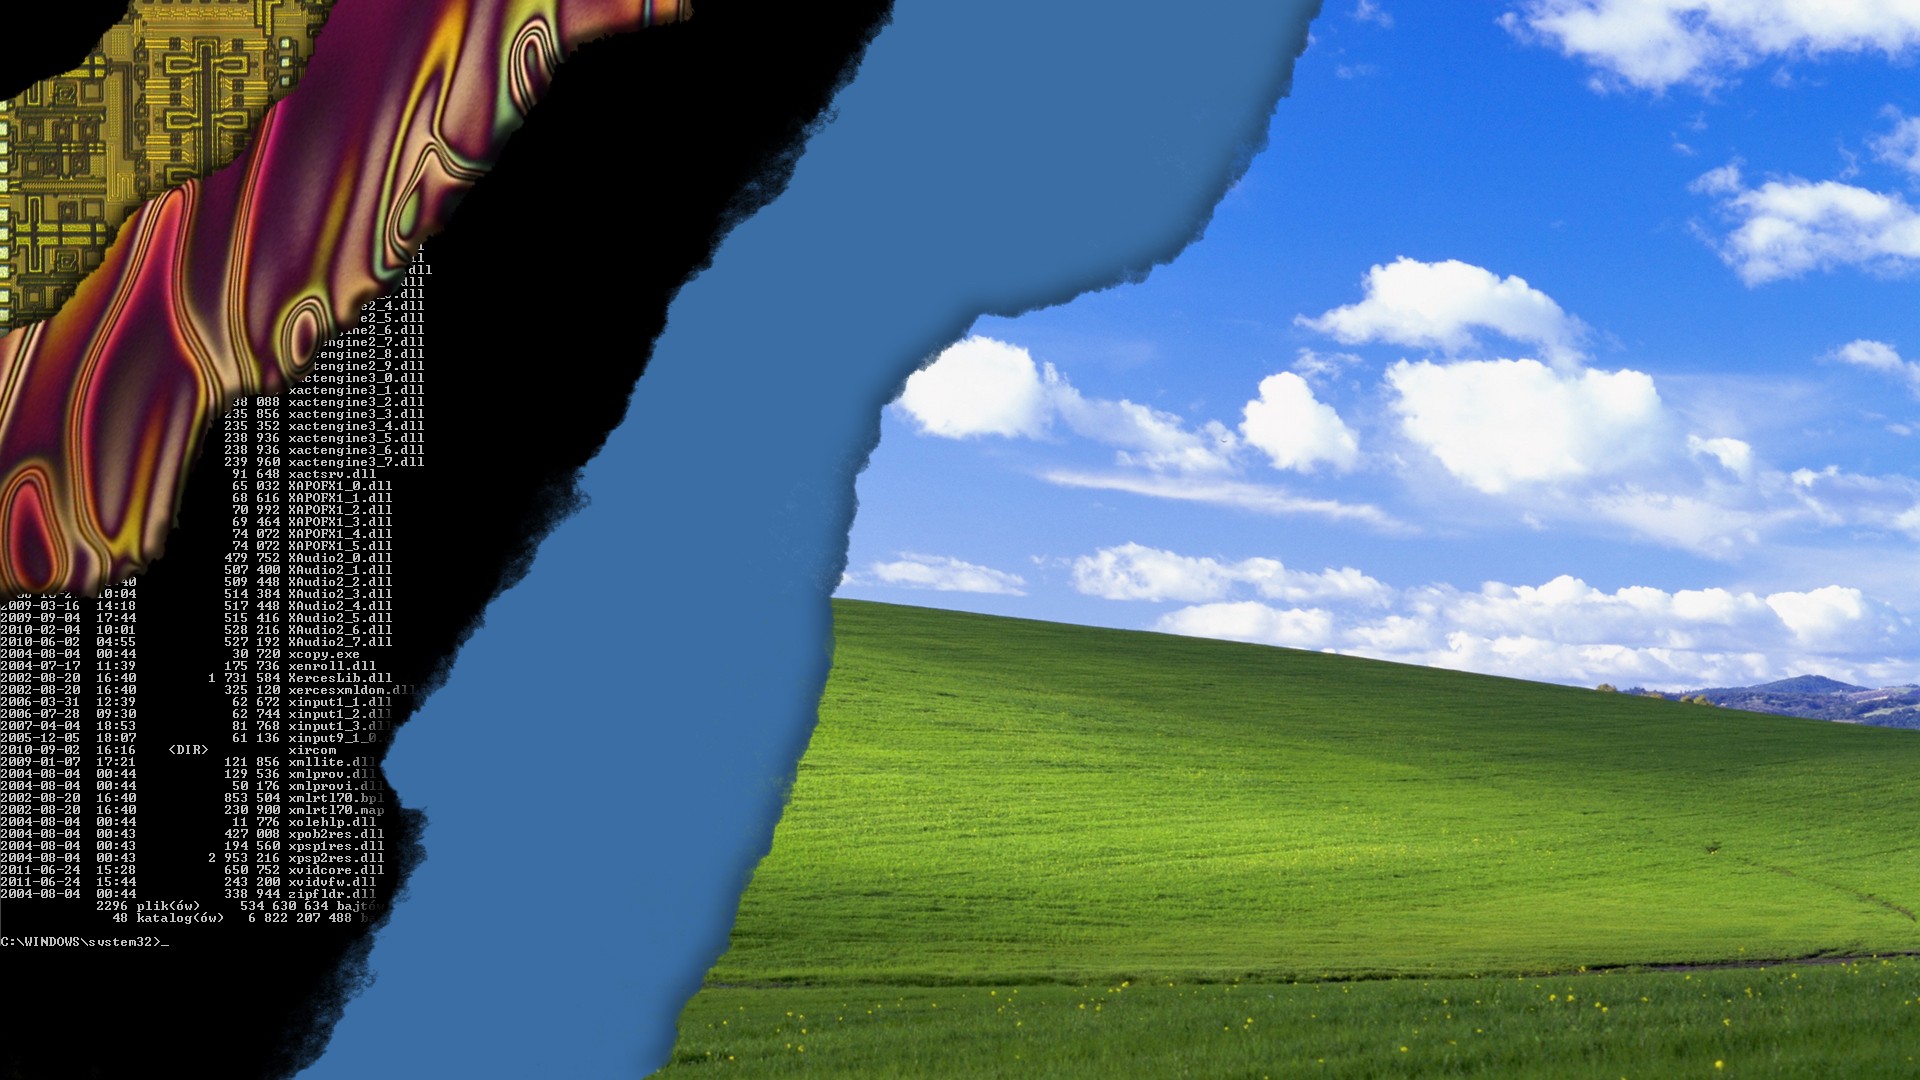 New Windows 11 Insider Wallpaper Resembles Windows XP Wallpaper from 2001 |  Beebom